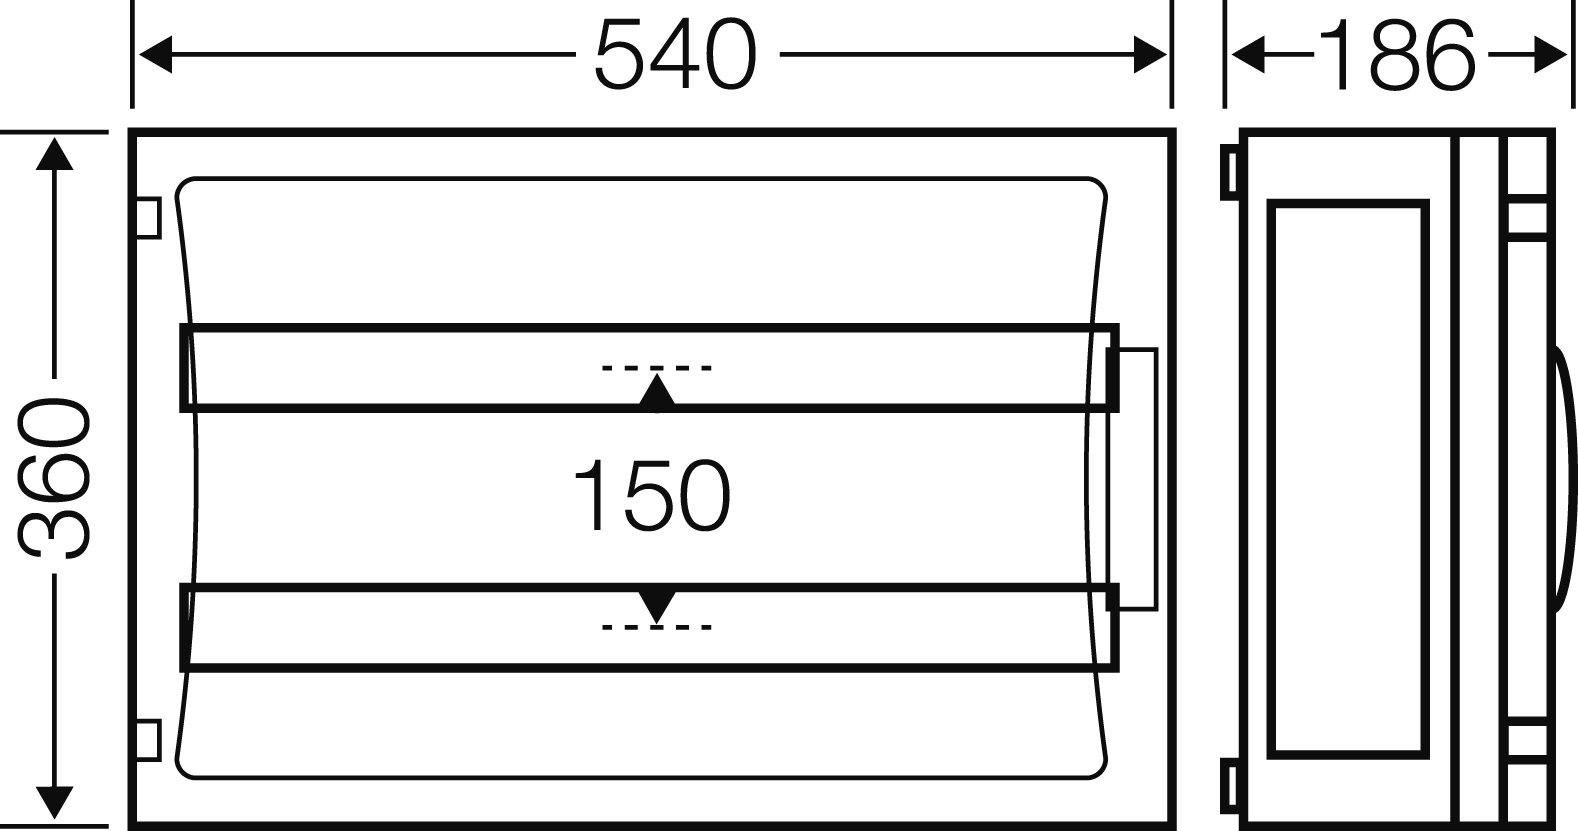 Hensel ENYSTAR-Automatengehäuse 54 Teilungseinheiten FP 1439 - 68000183